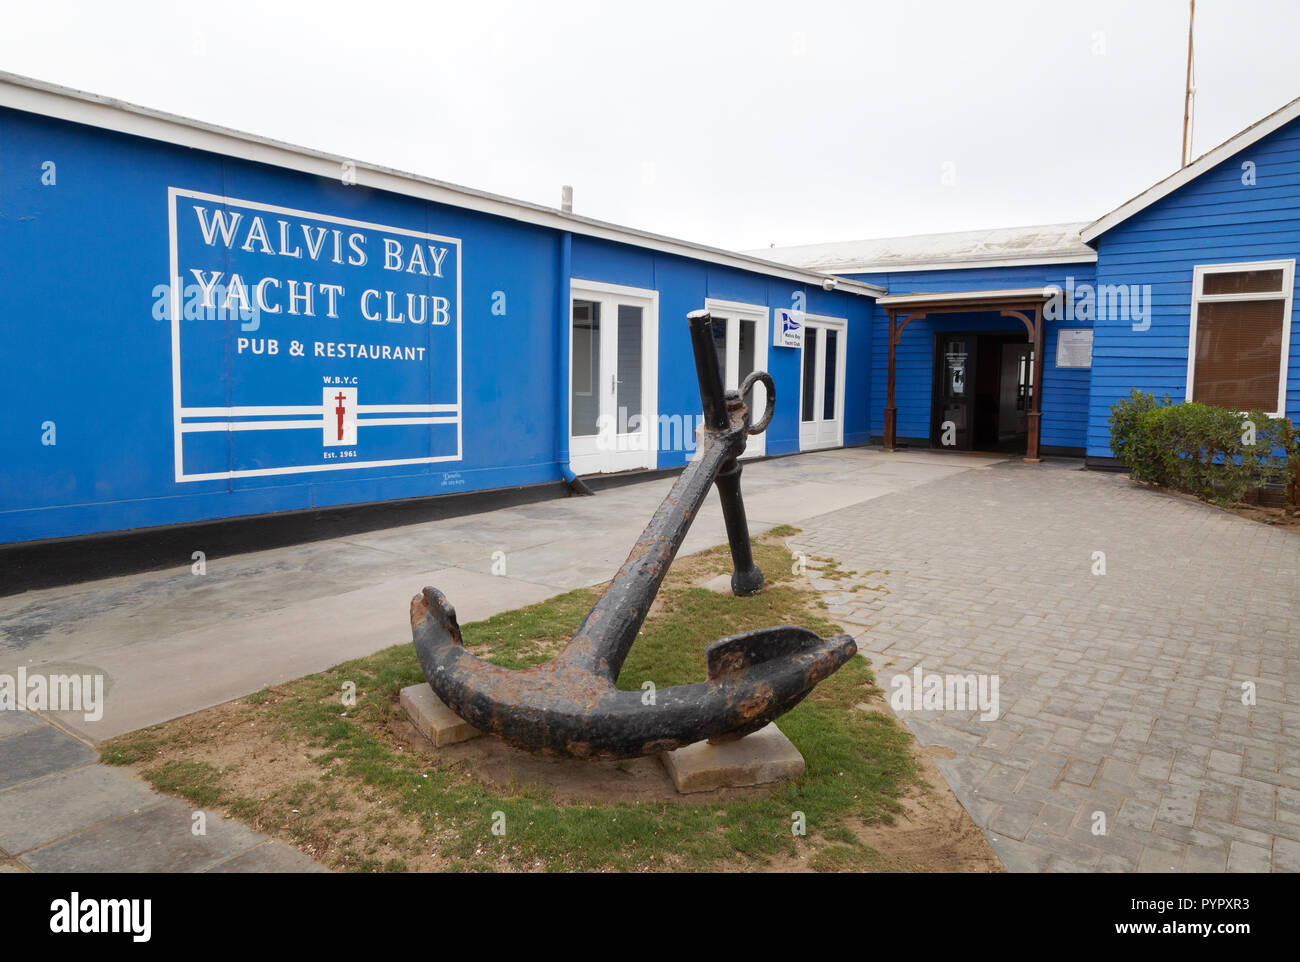 Walvis Bay Yacht Club, Walvis Bay, Namibia Africa Stock Photo